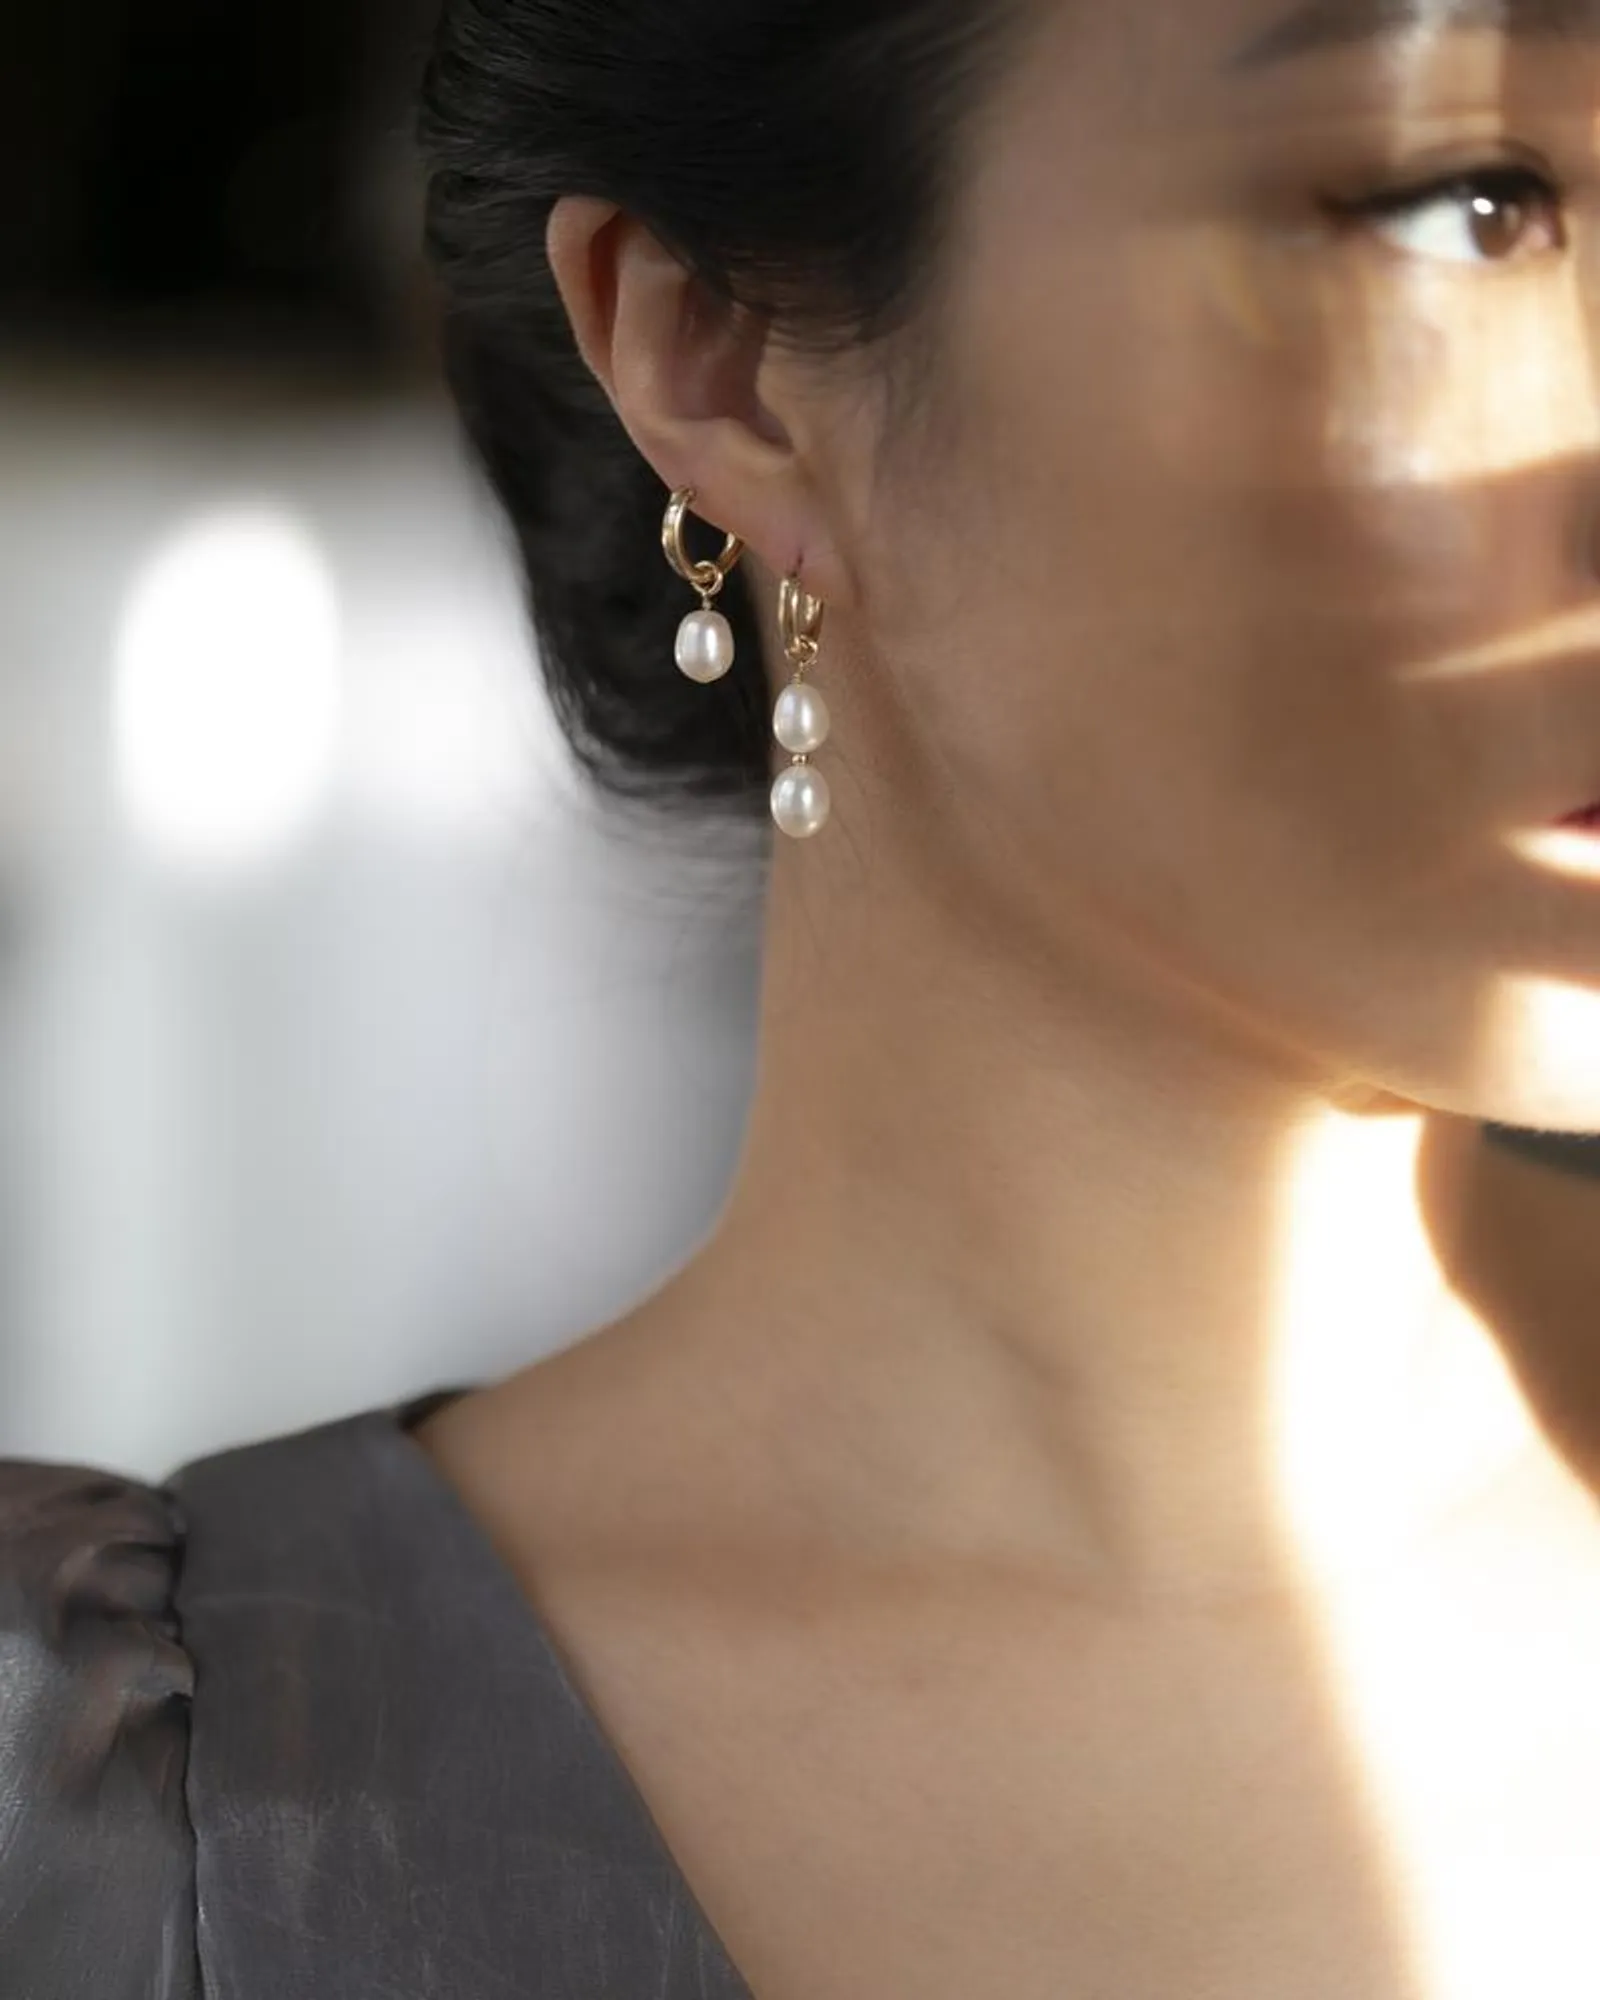 Model Perhiasan Perempuan untuk Gaya Manis di Hari Lebaran